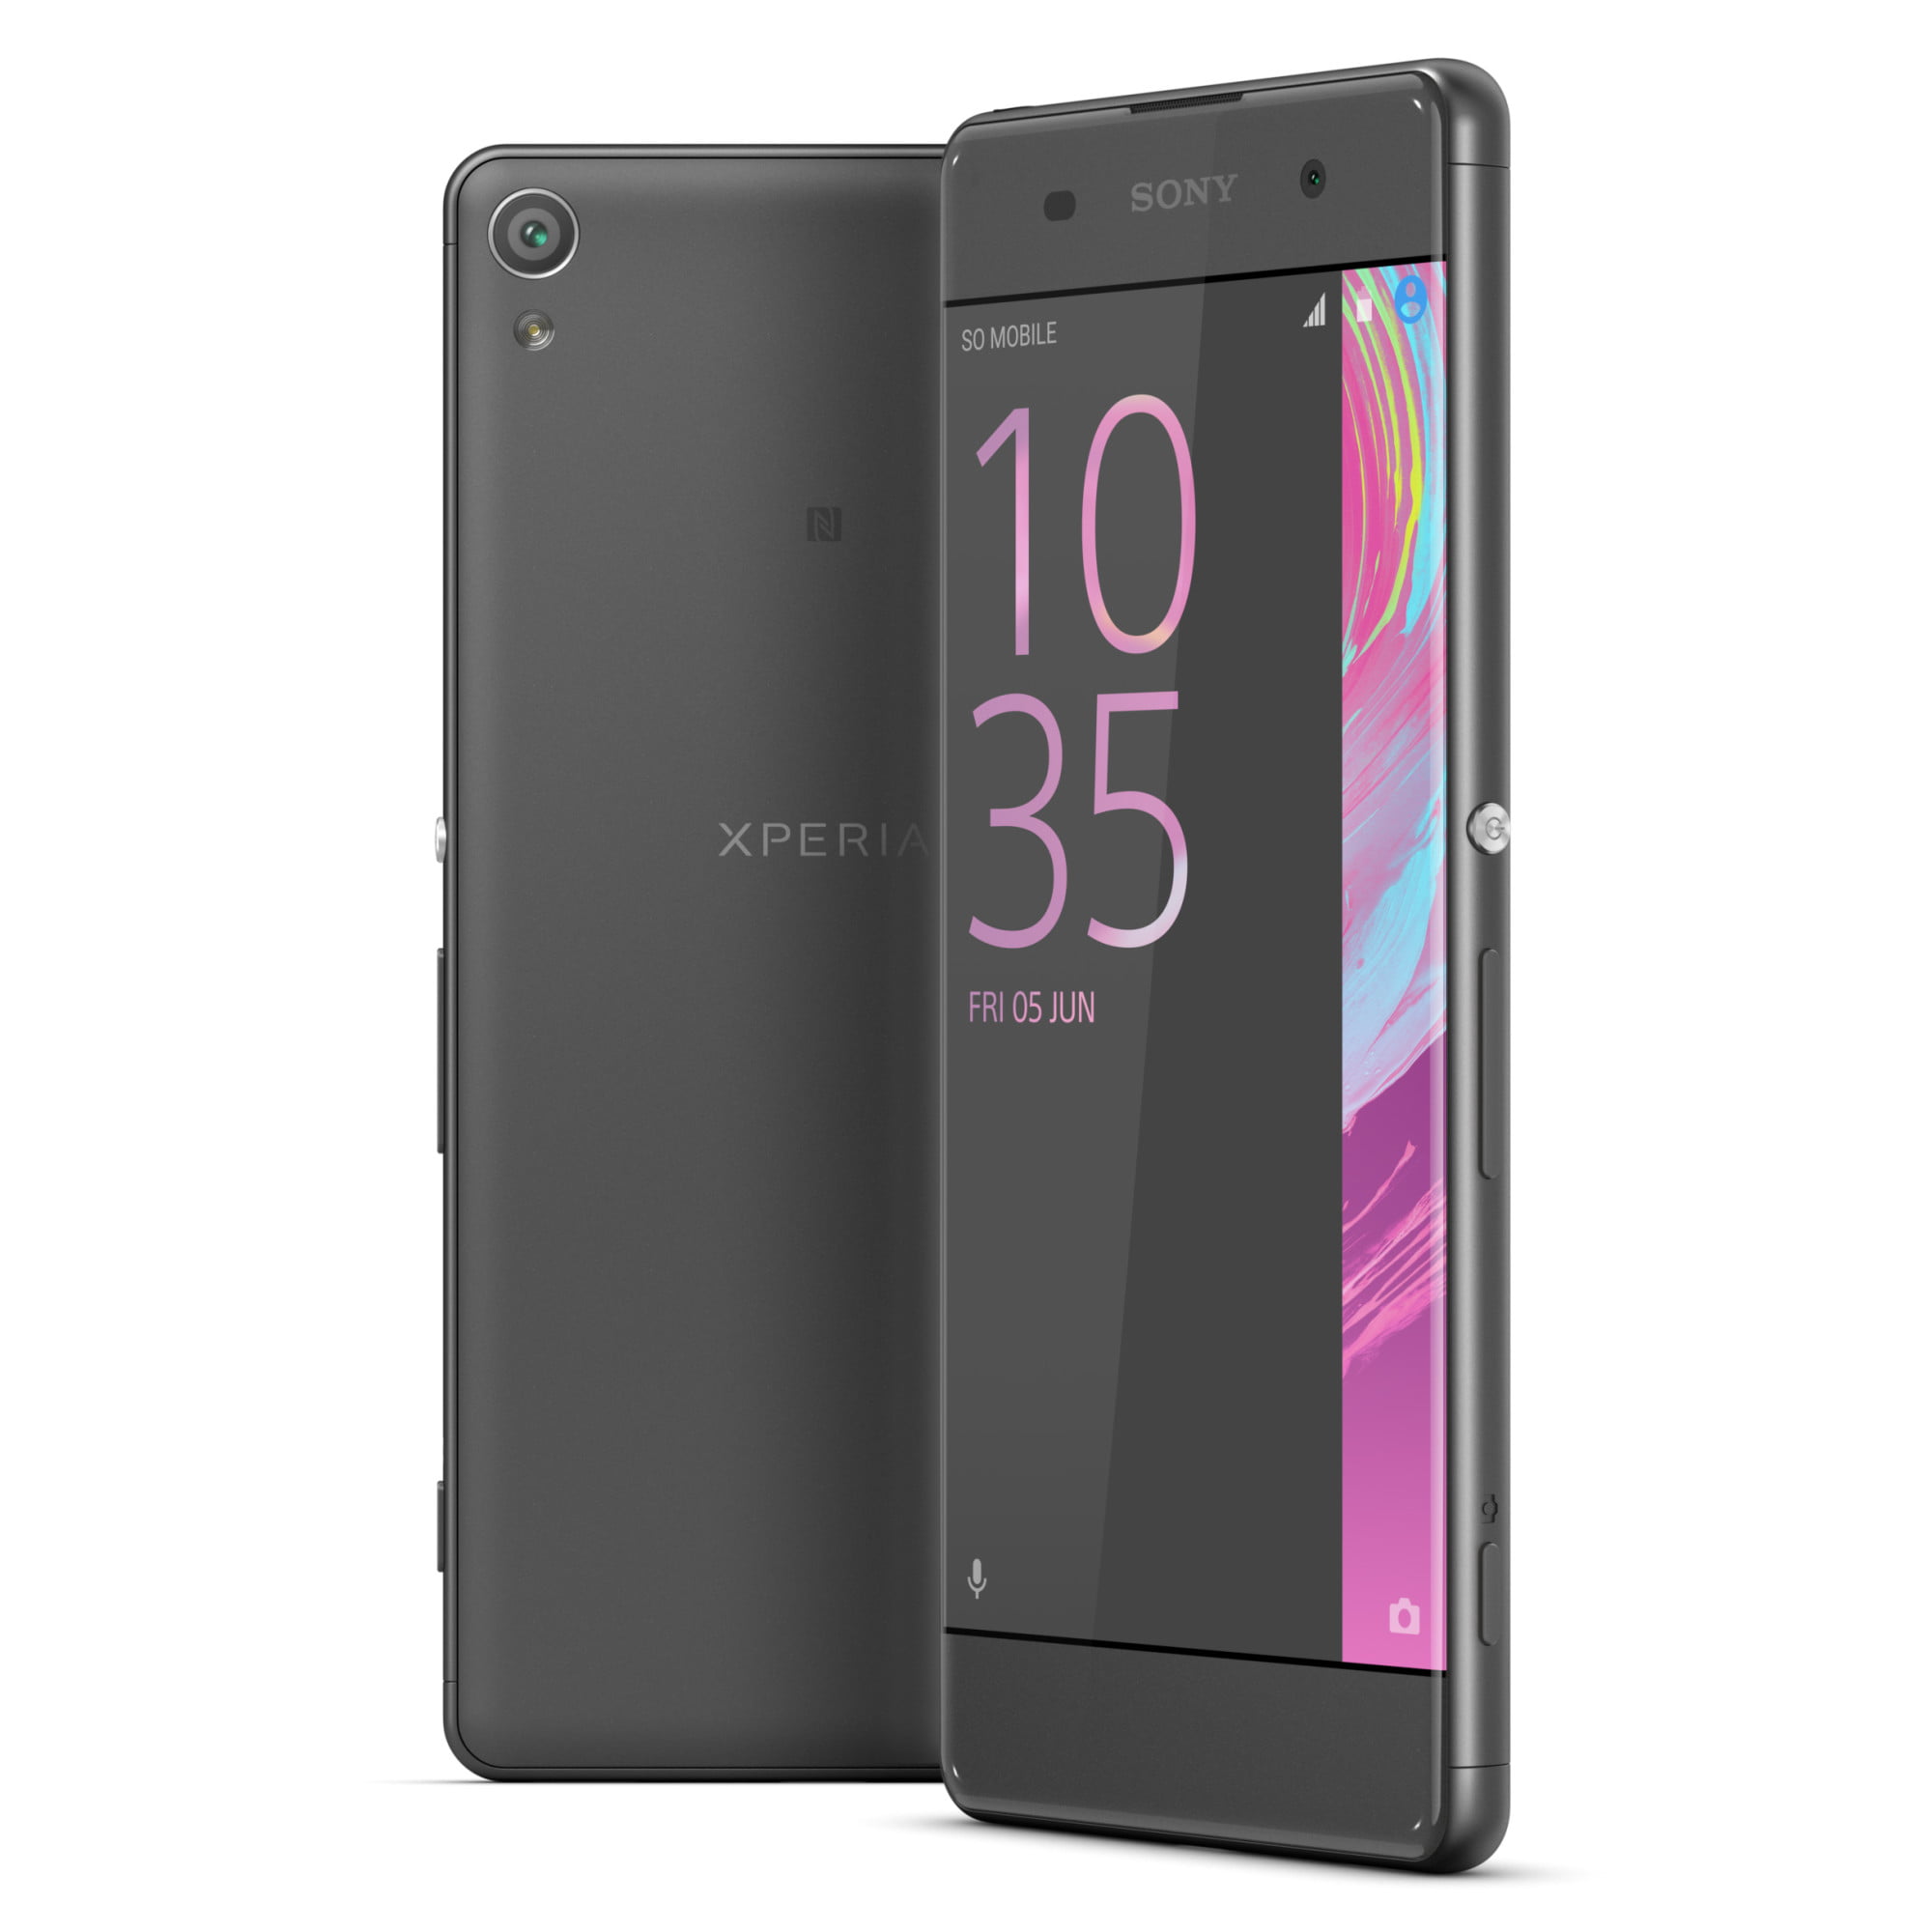 Ontwaken stropdas Zeg opzij Sony Xperia XA 16GB 5-Inch Smartphone, Unlocked - Graphite Black -  Walmart.com